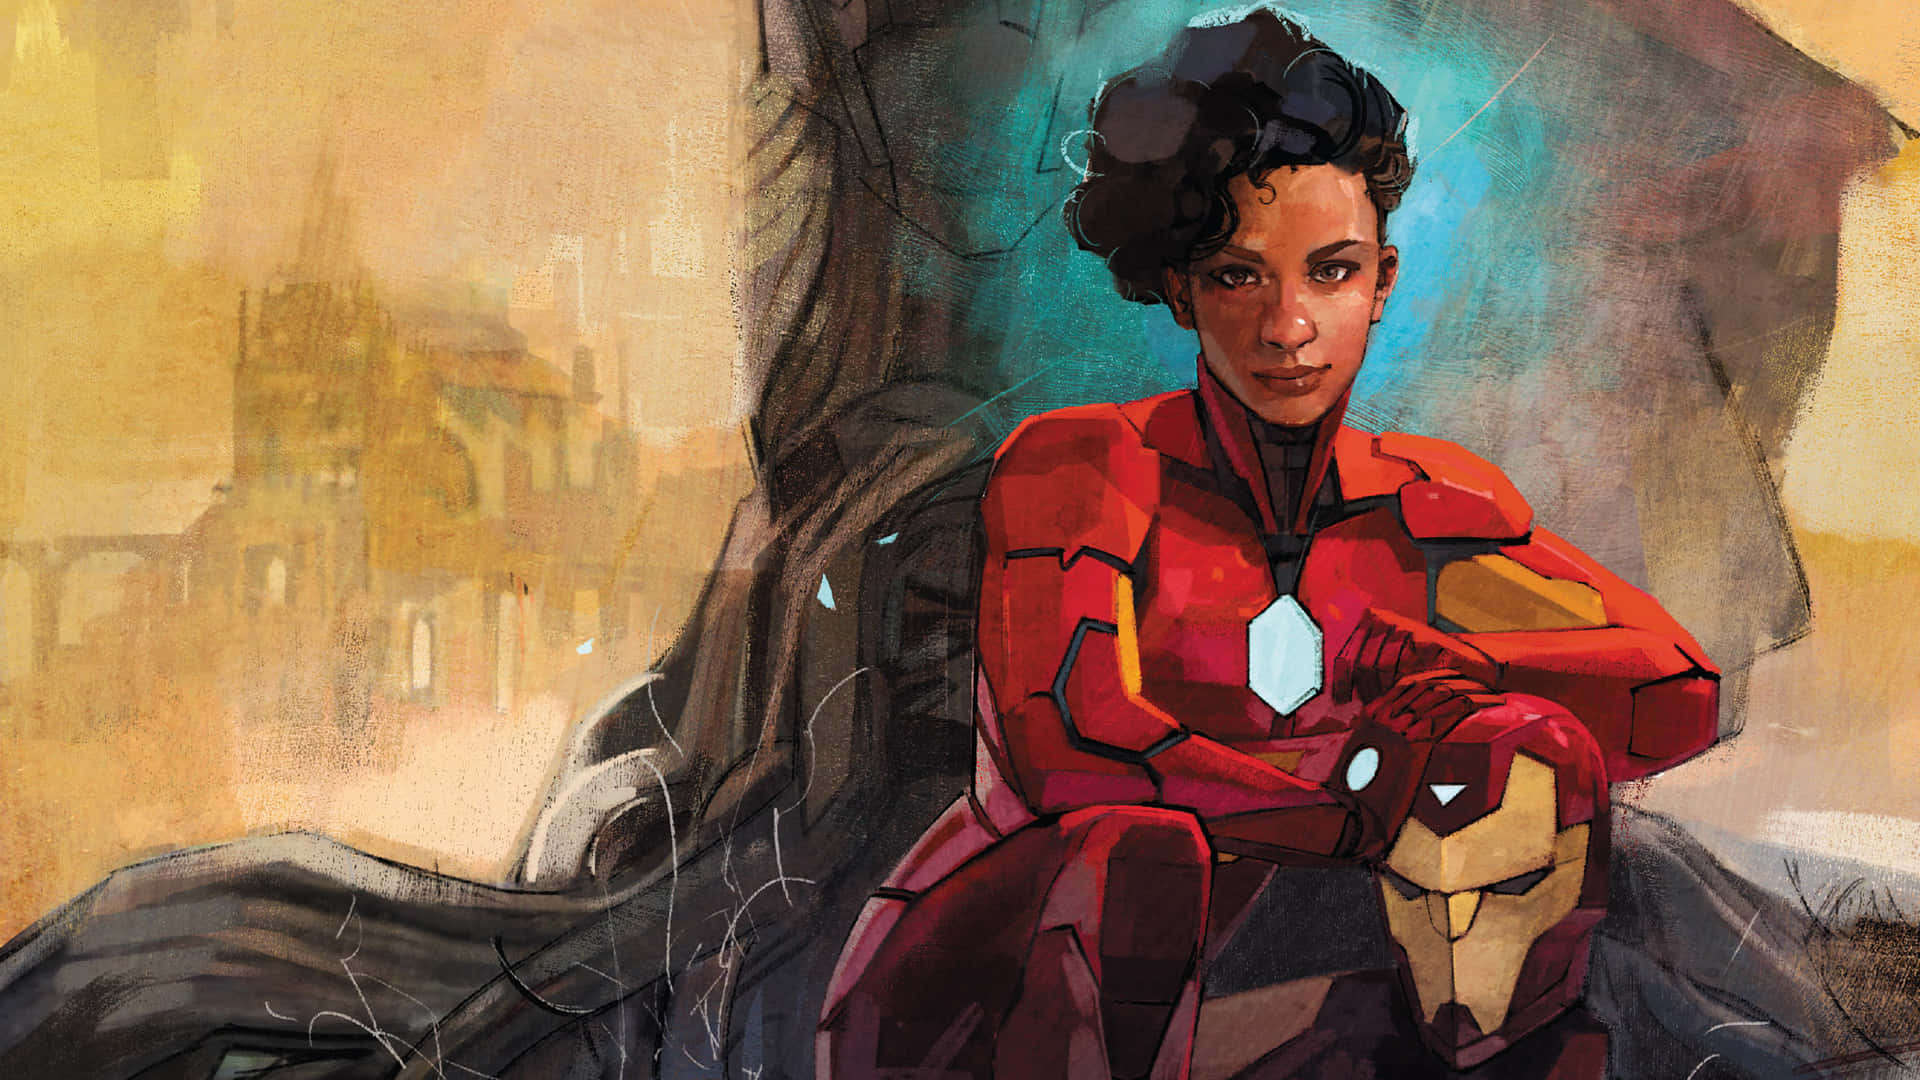 "High-tech Ironheart suit provides Tony Stark with superhuman abilities" Wallpaper